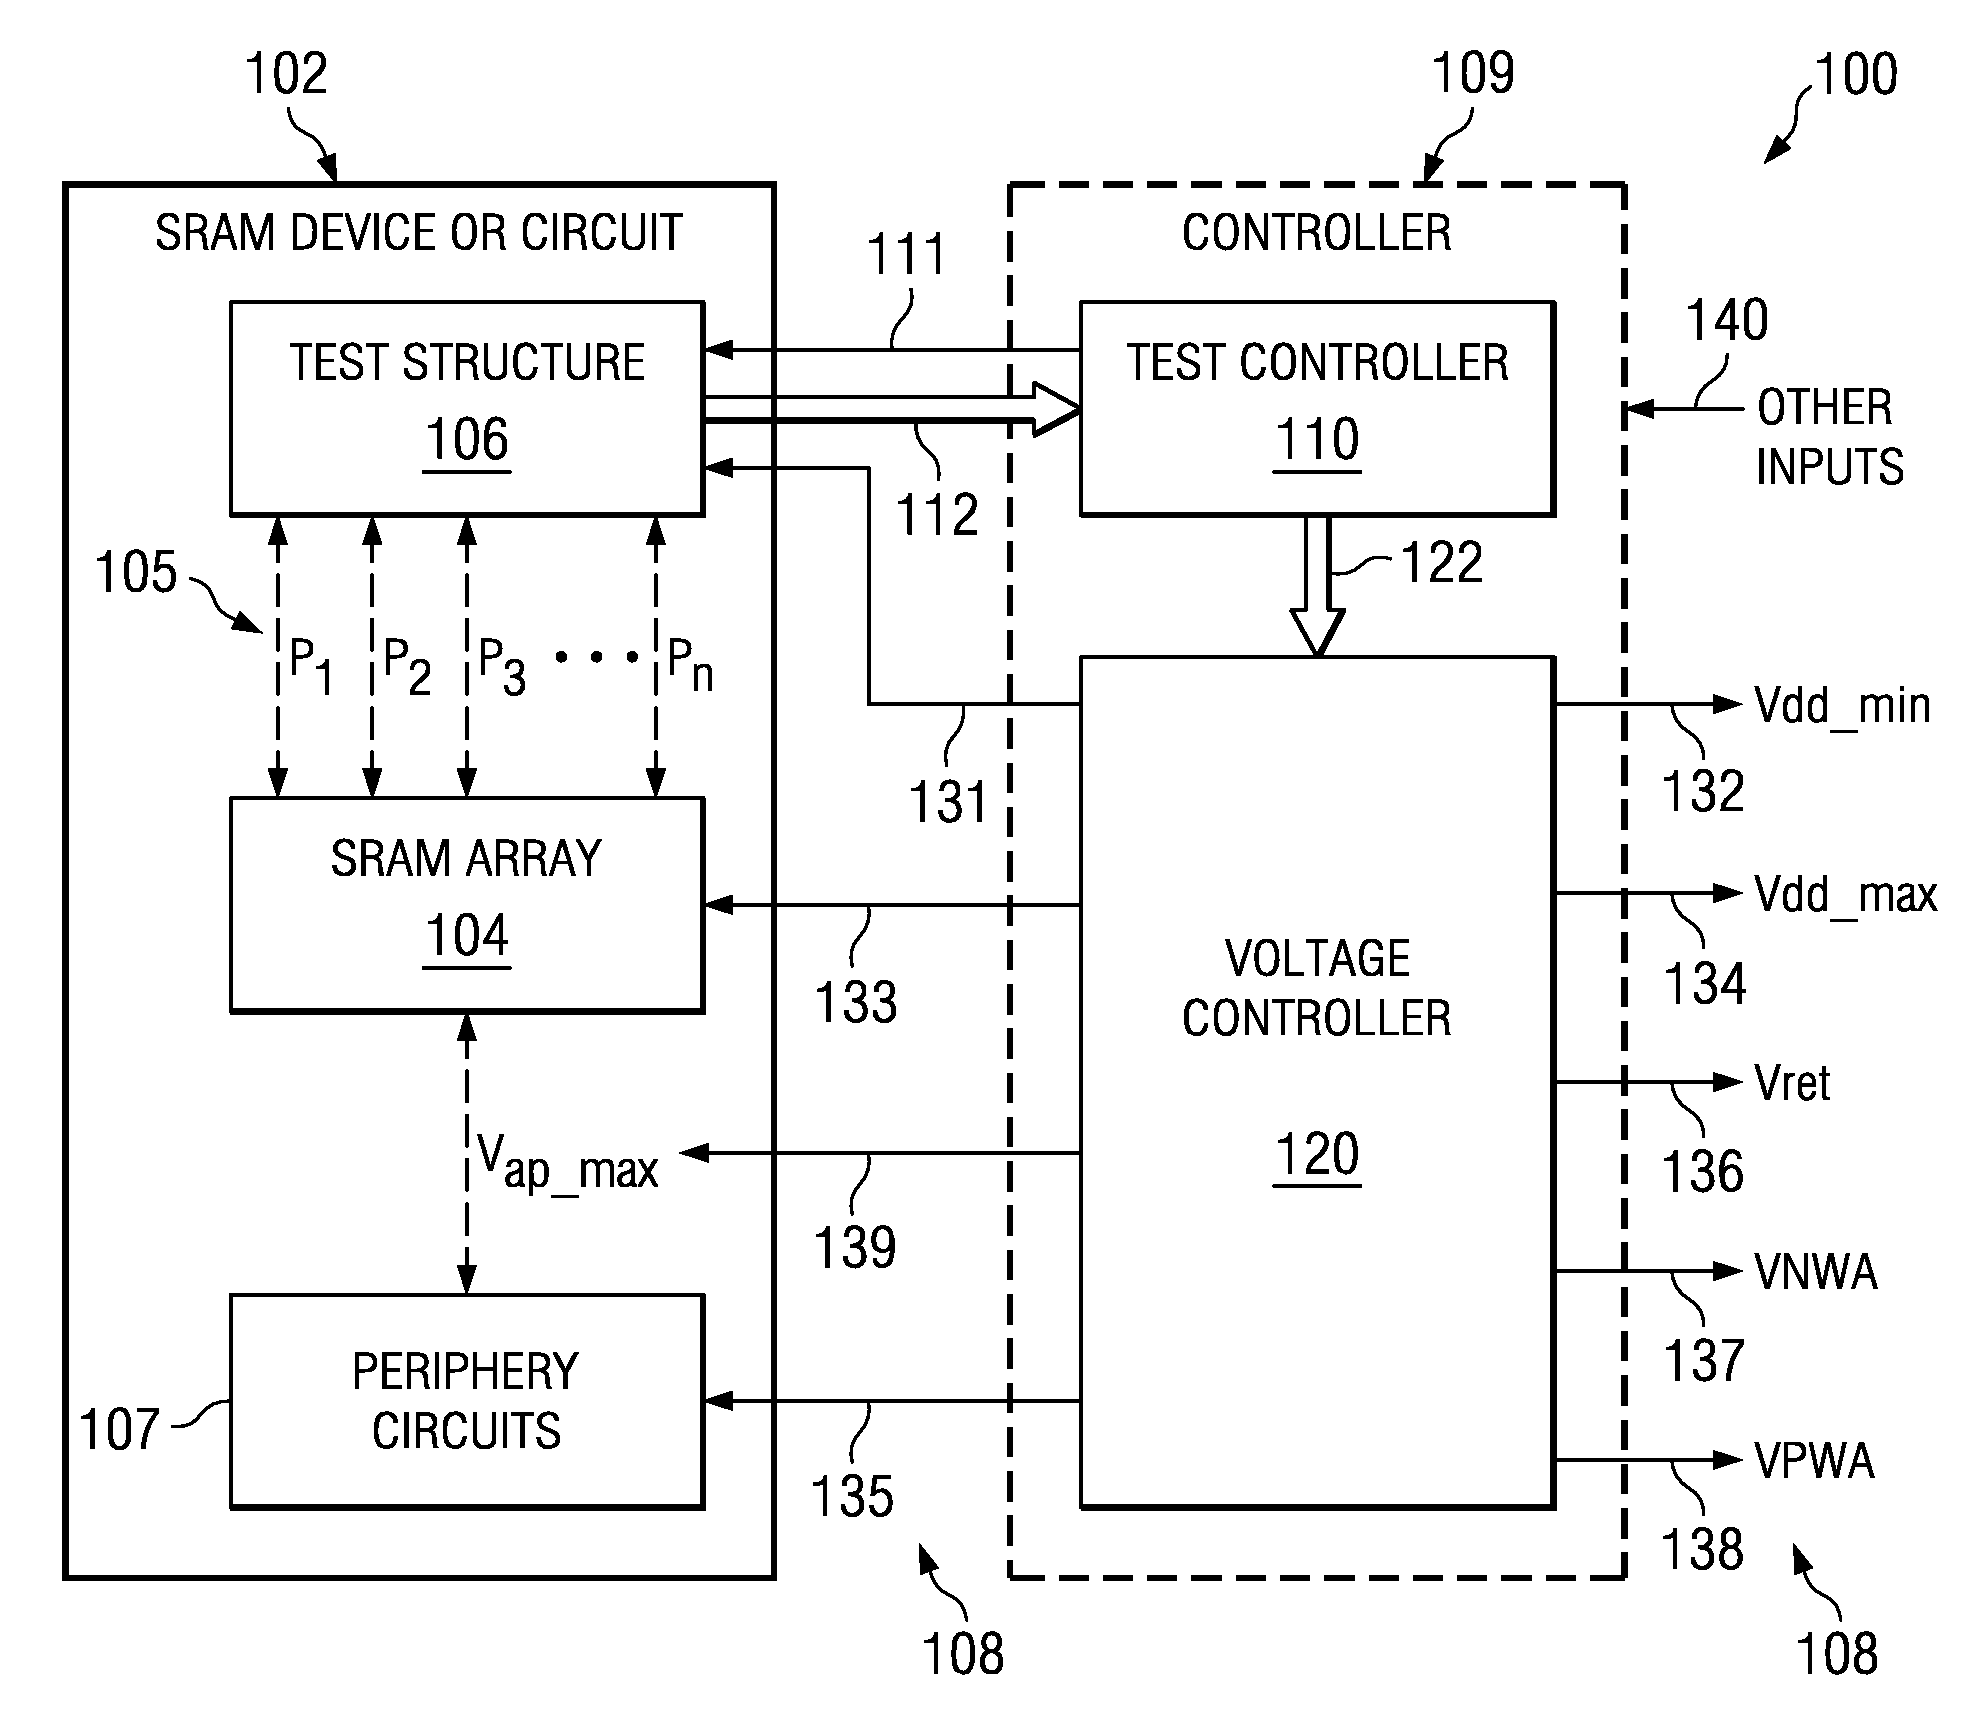 Adaptive voltage control for SRAM